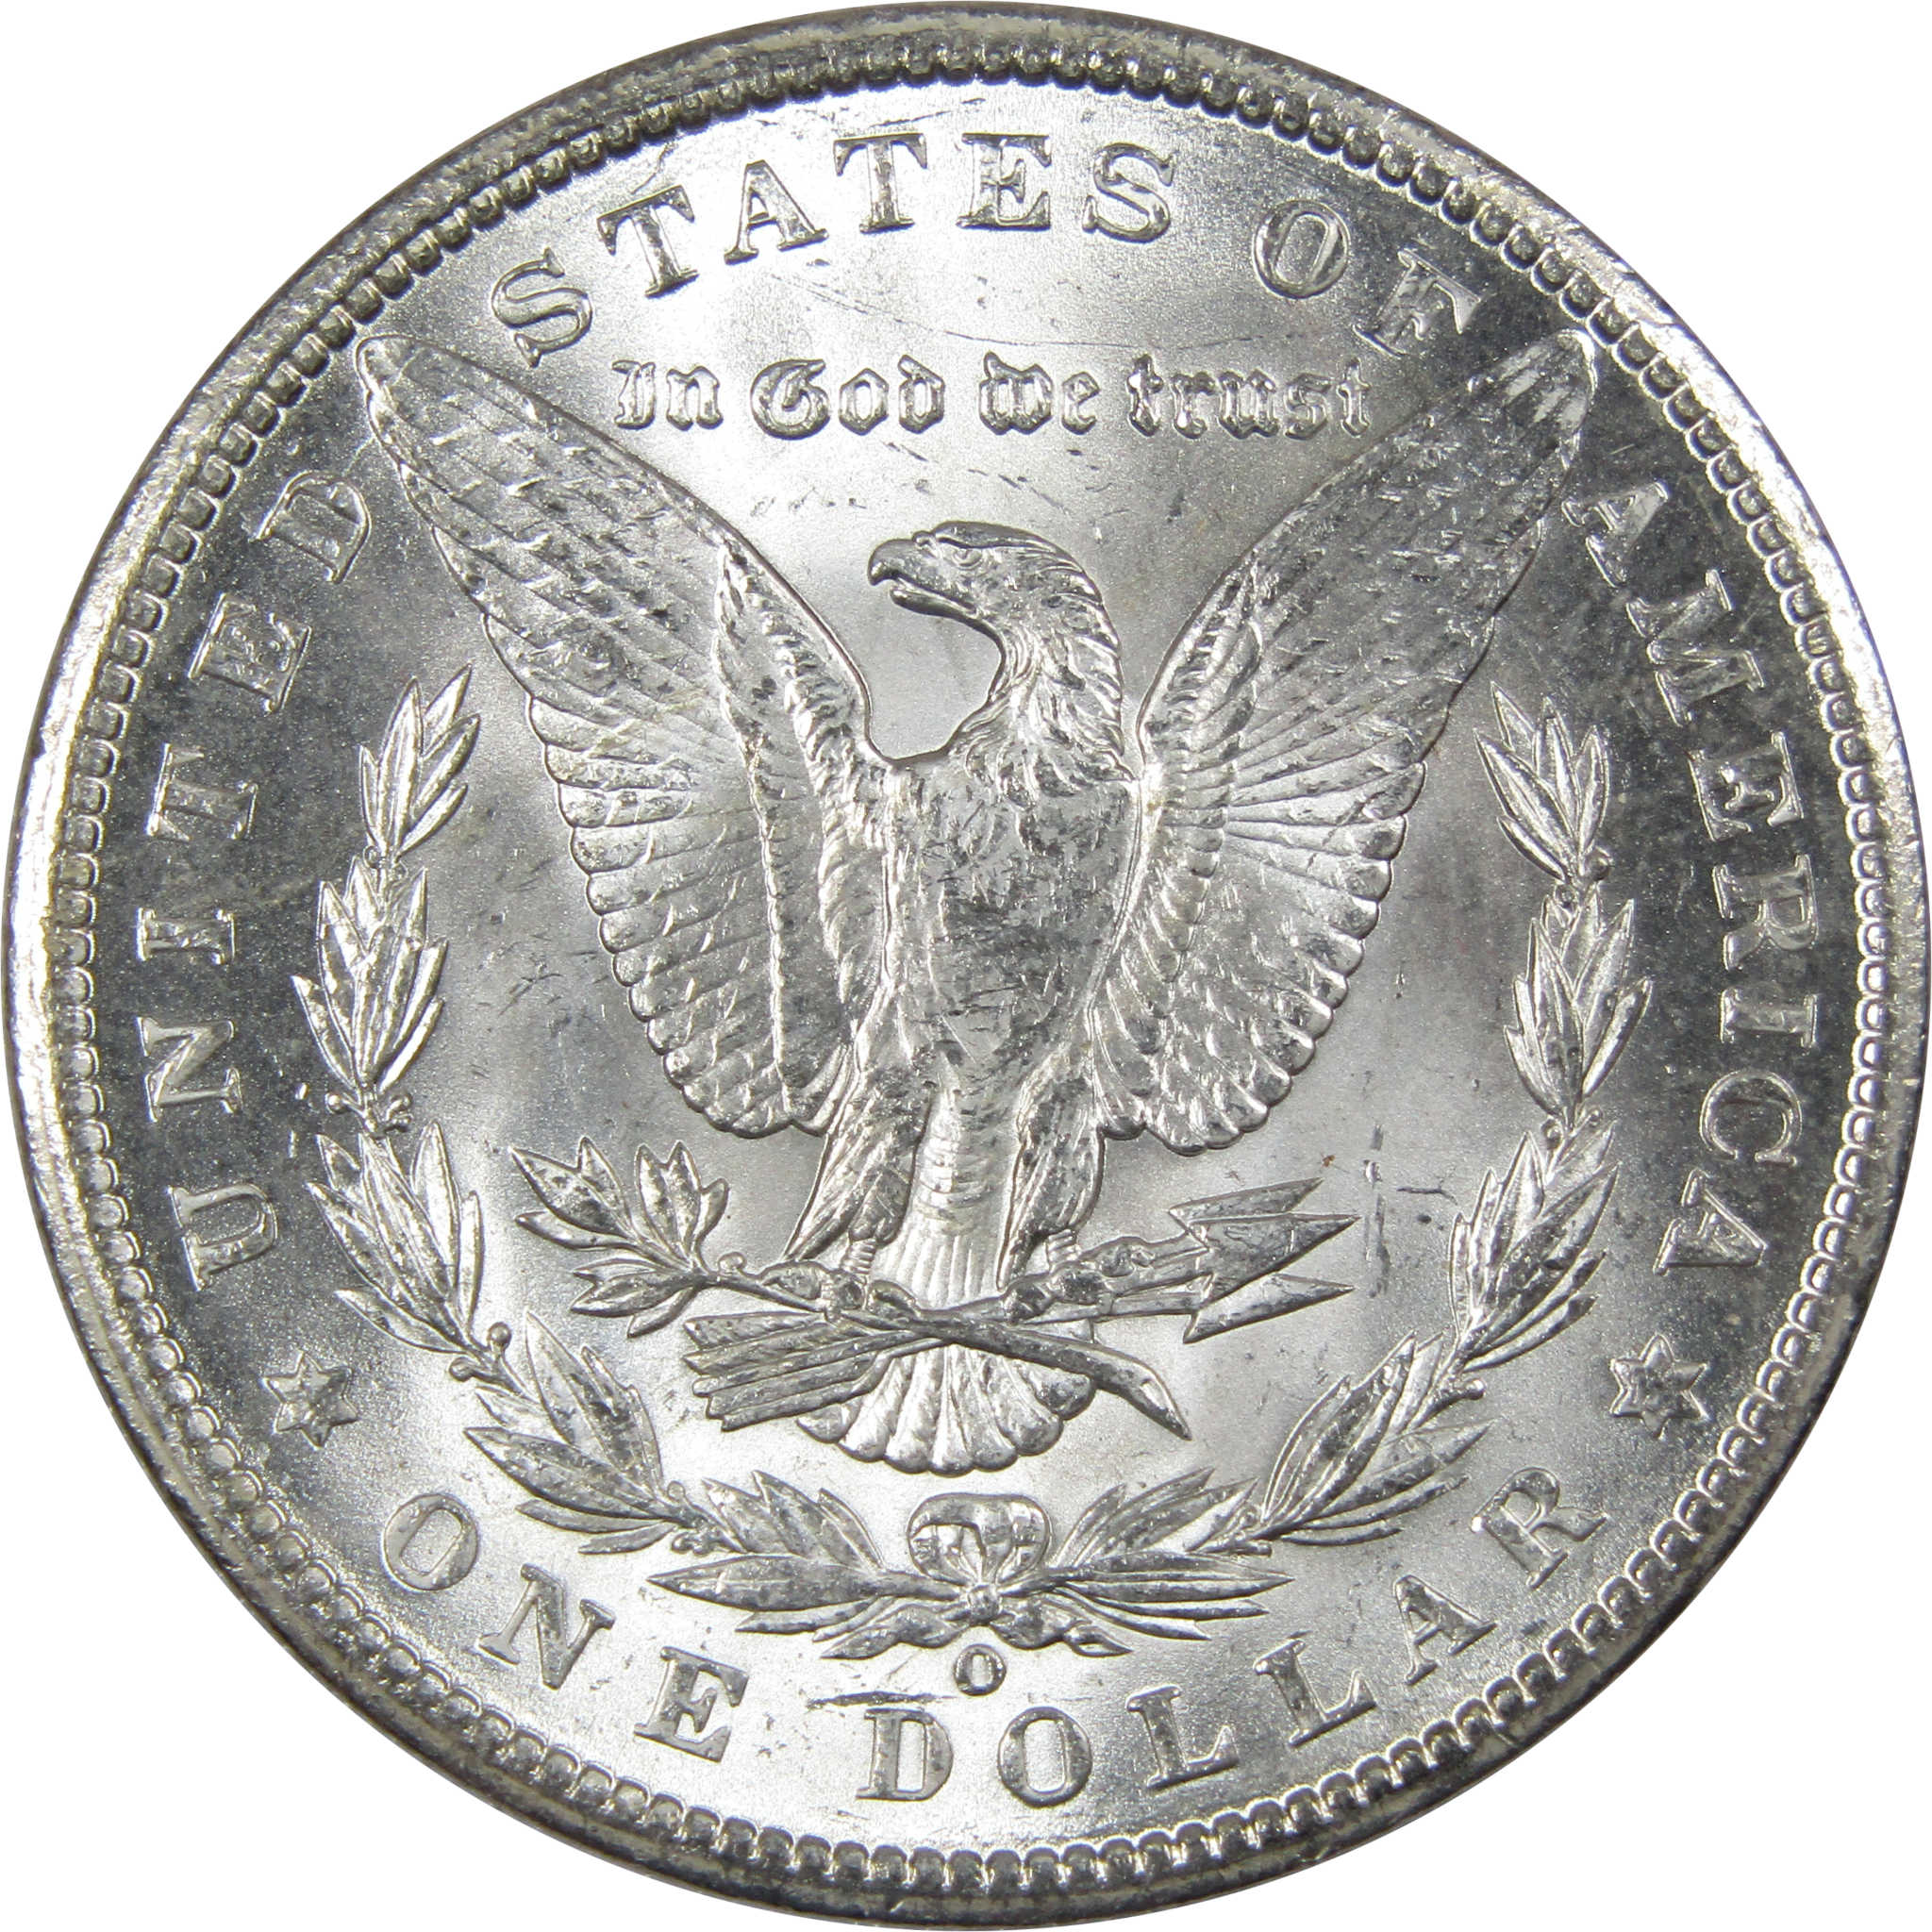 1900 O Morgan Dollar BU Uncirculated Mint State 90% Silver SKU:IPC9750 - Morgan coin - Morgan silver dollar - Morgan silver dollar for sale - Profile Coins &amp; Collectibles